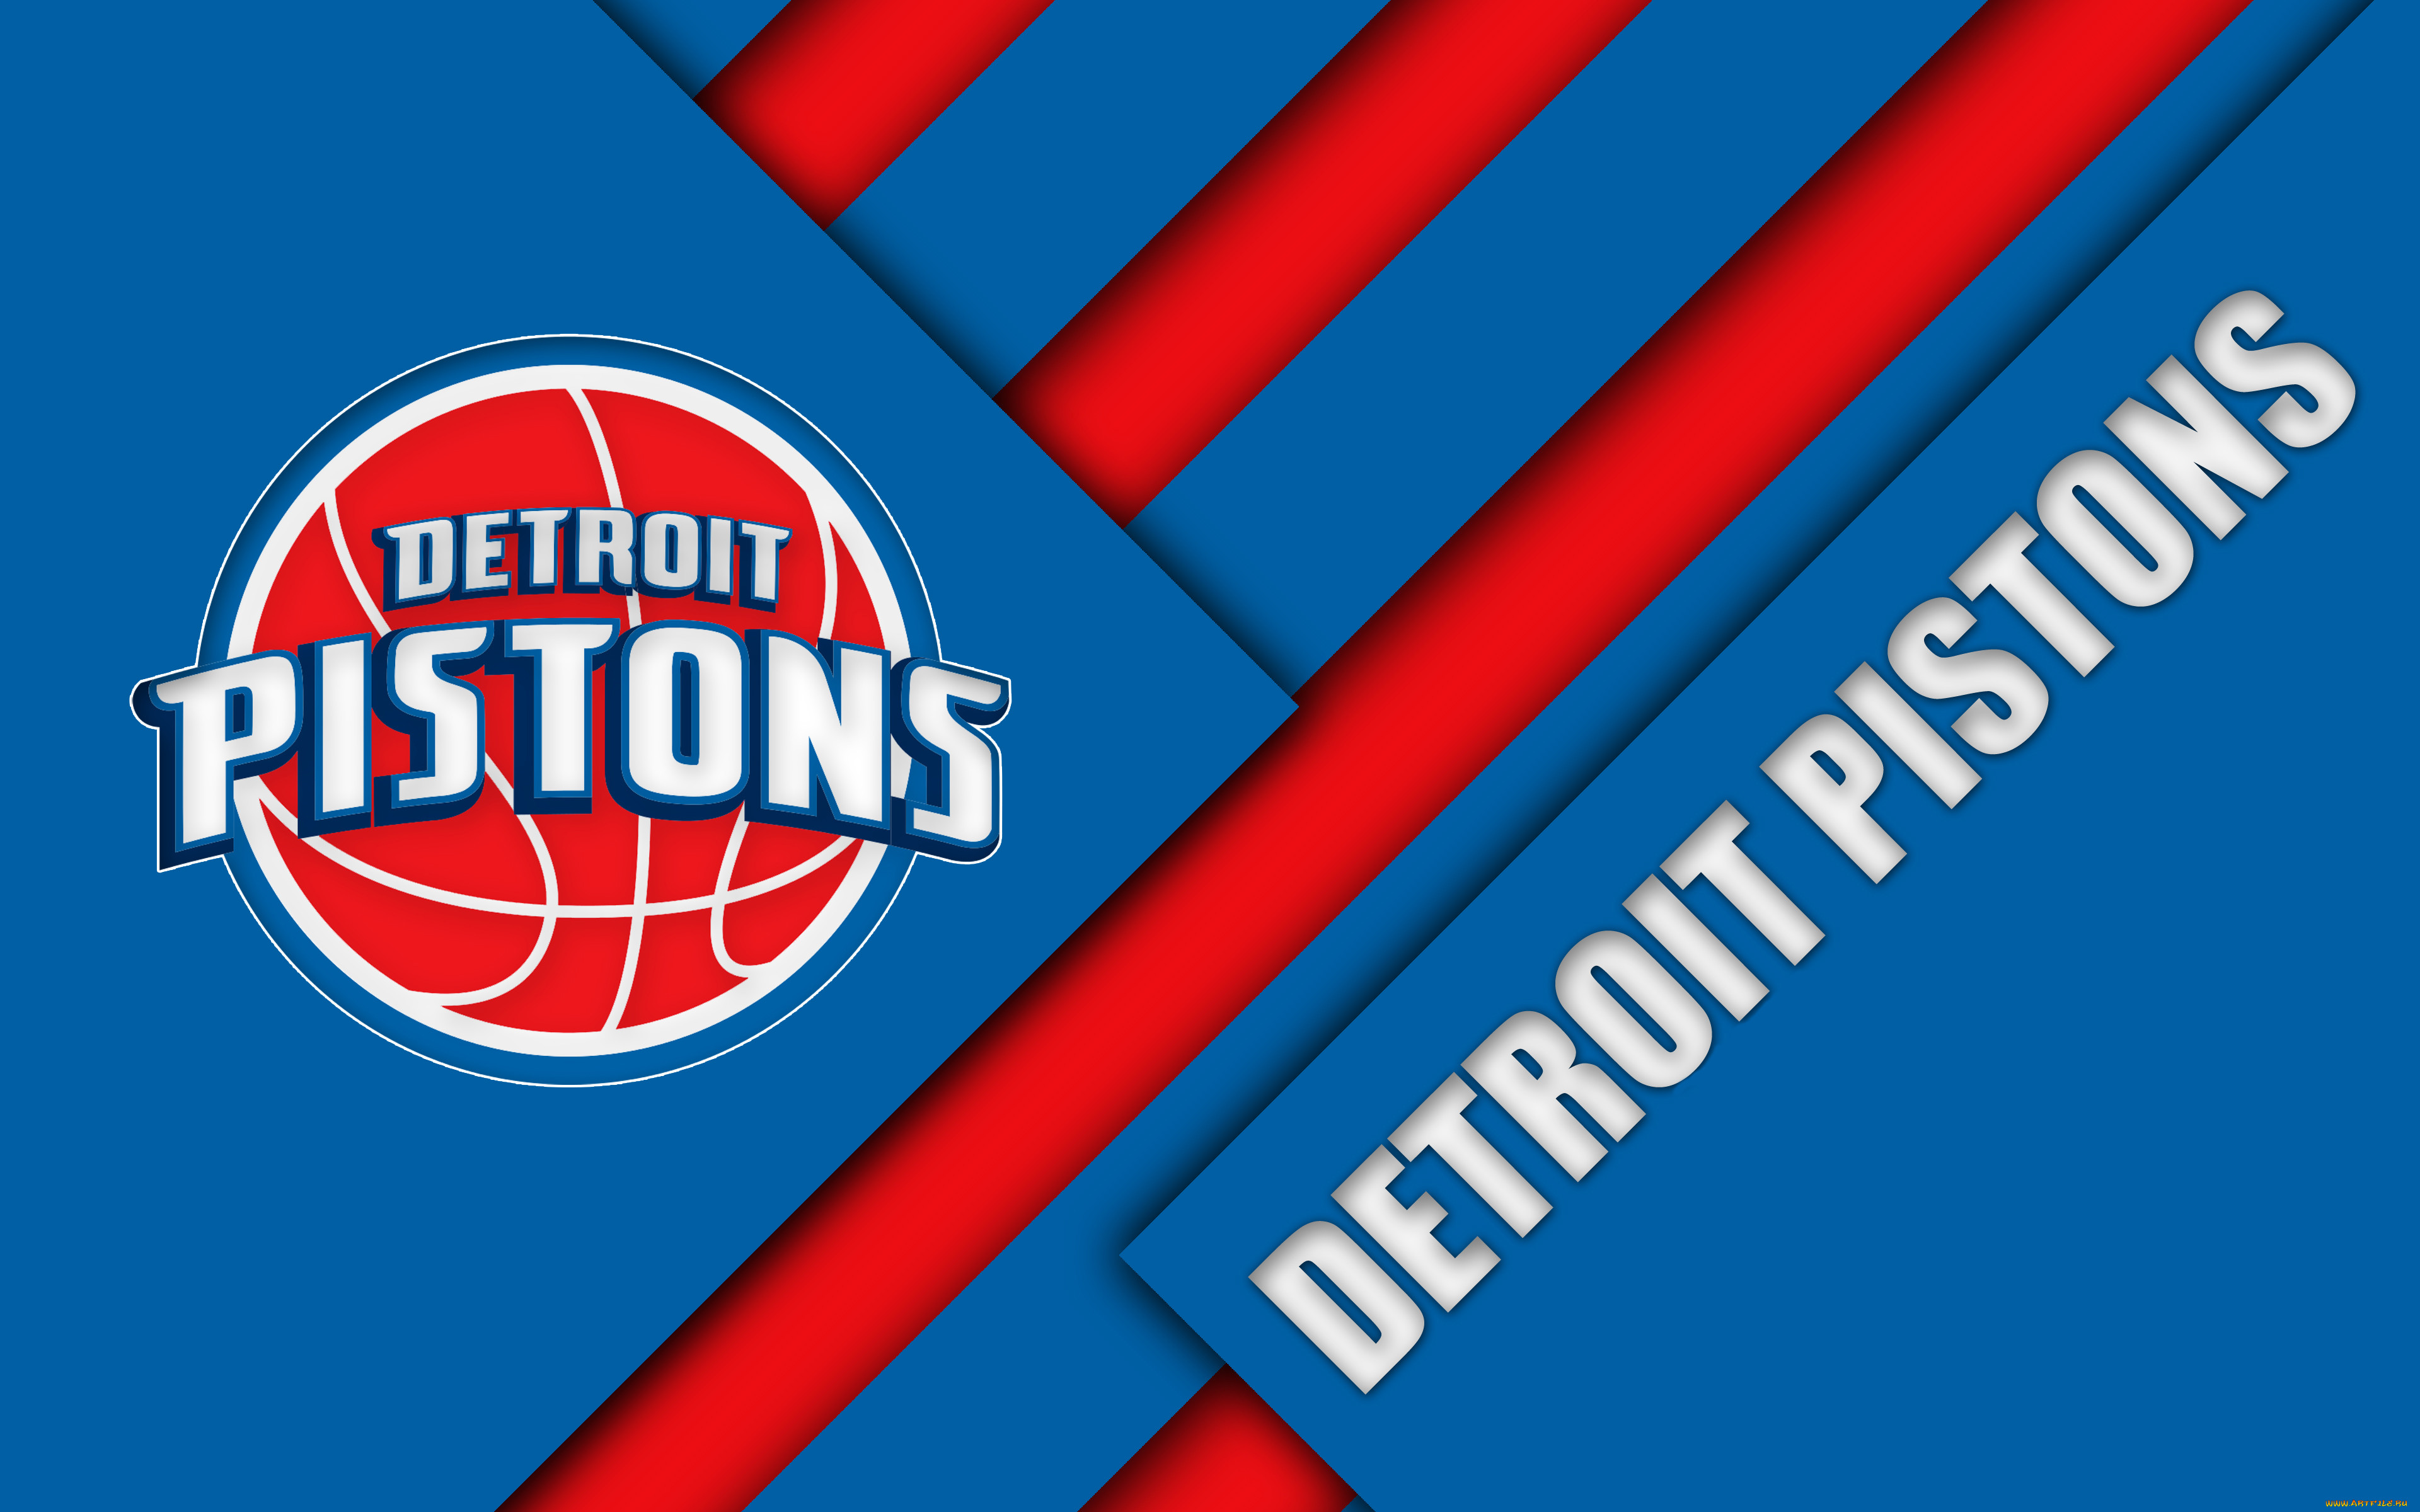 Detroit pistons. Детройт Пистонс эмблема. Детройт логотип НБА. Детройт Пистонс 2000. НБА – Детройт Пистонс.